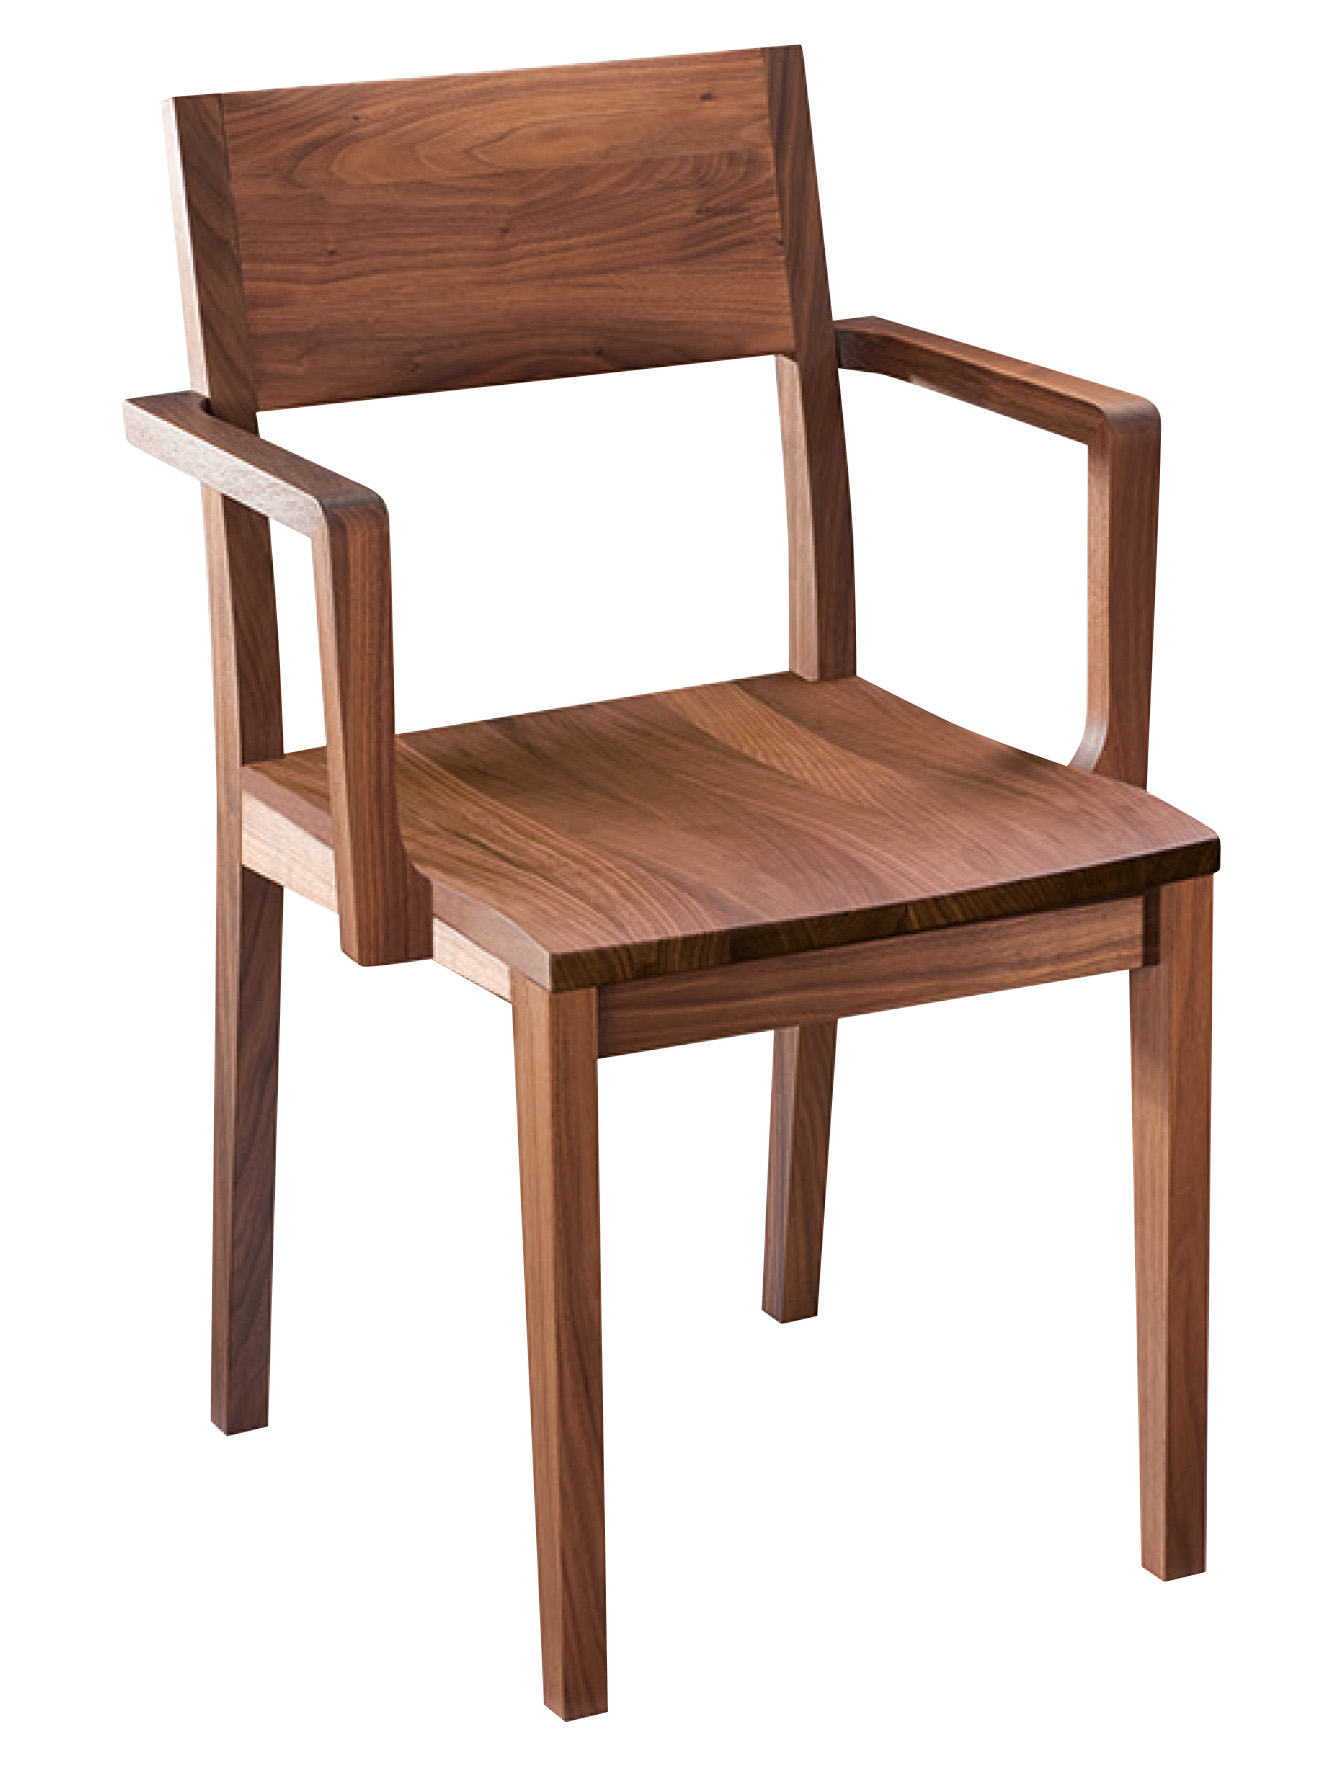 CARESSE TREND Armlehnstuhl mit körpergerecht ausgeformtem Holzsitz